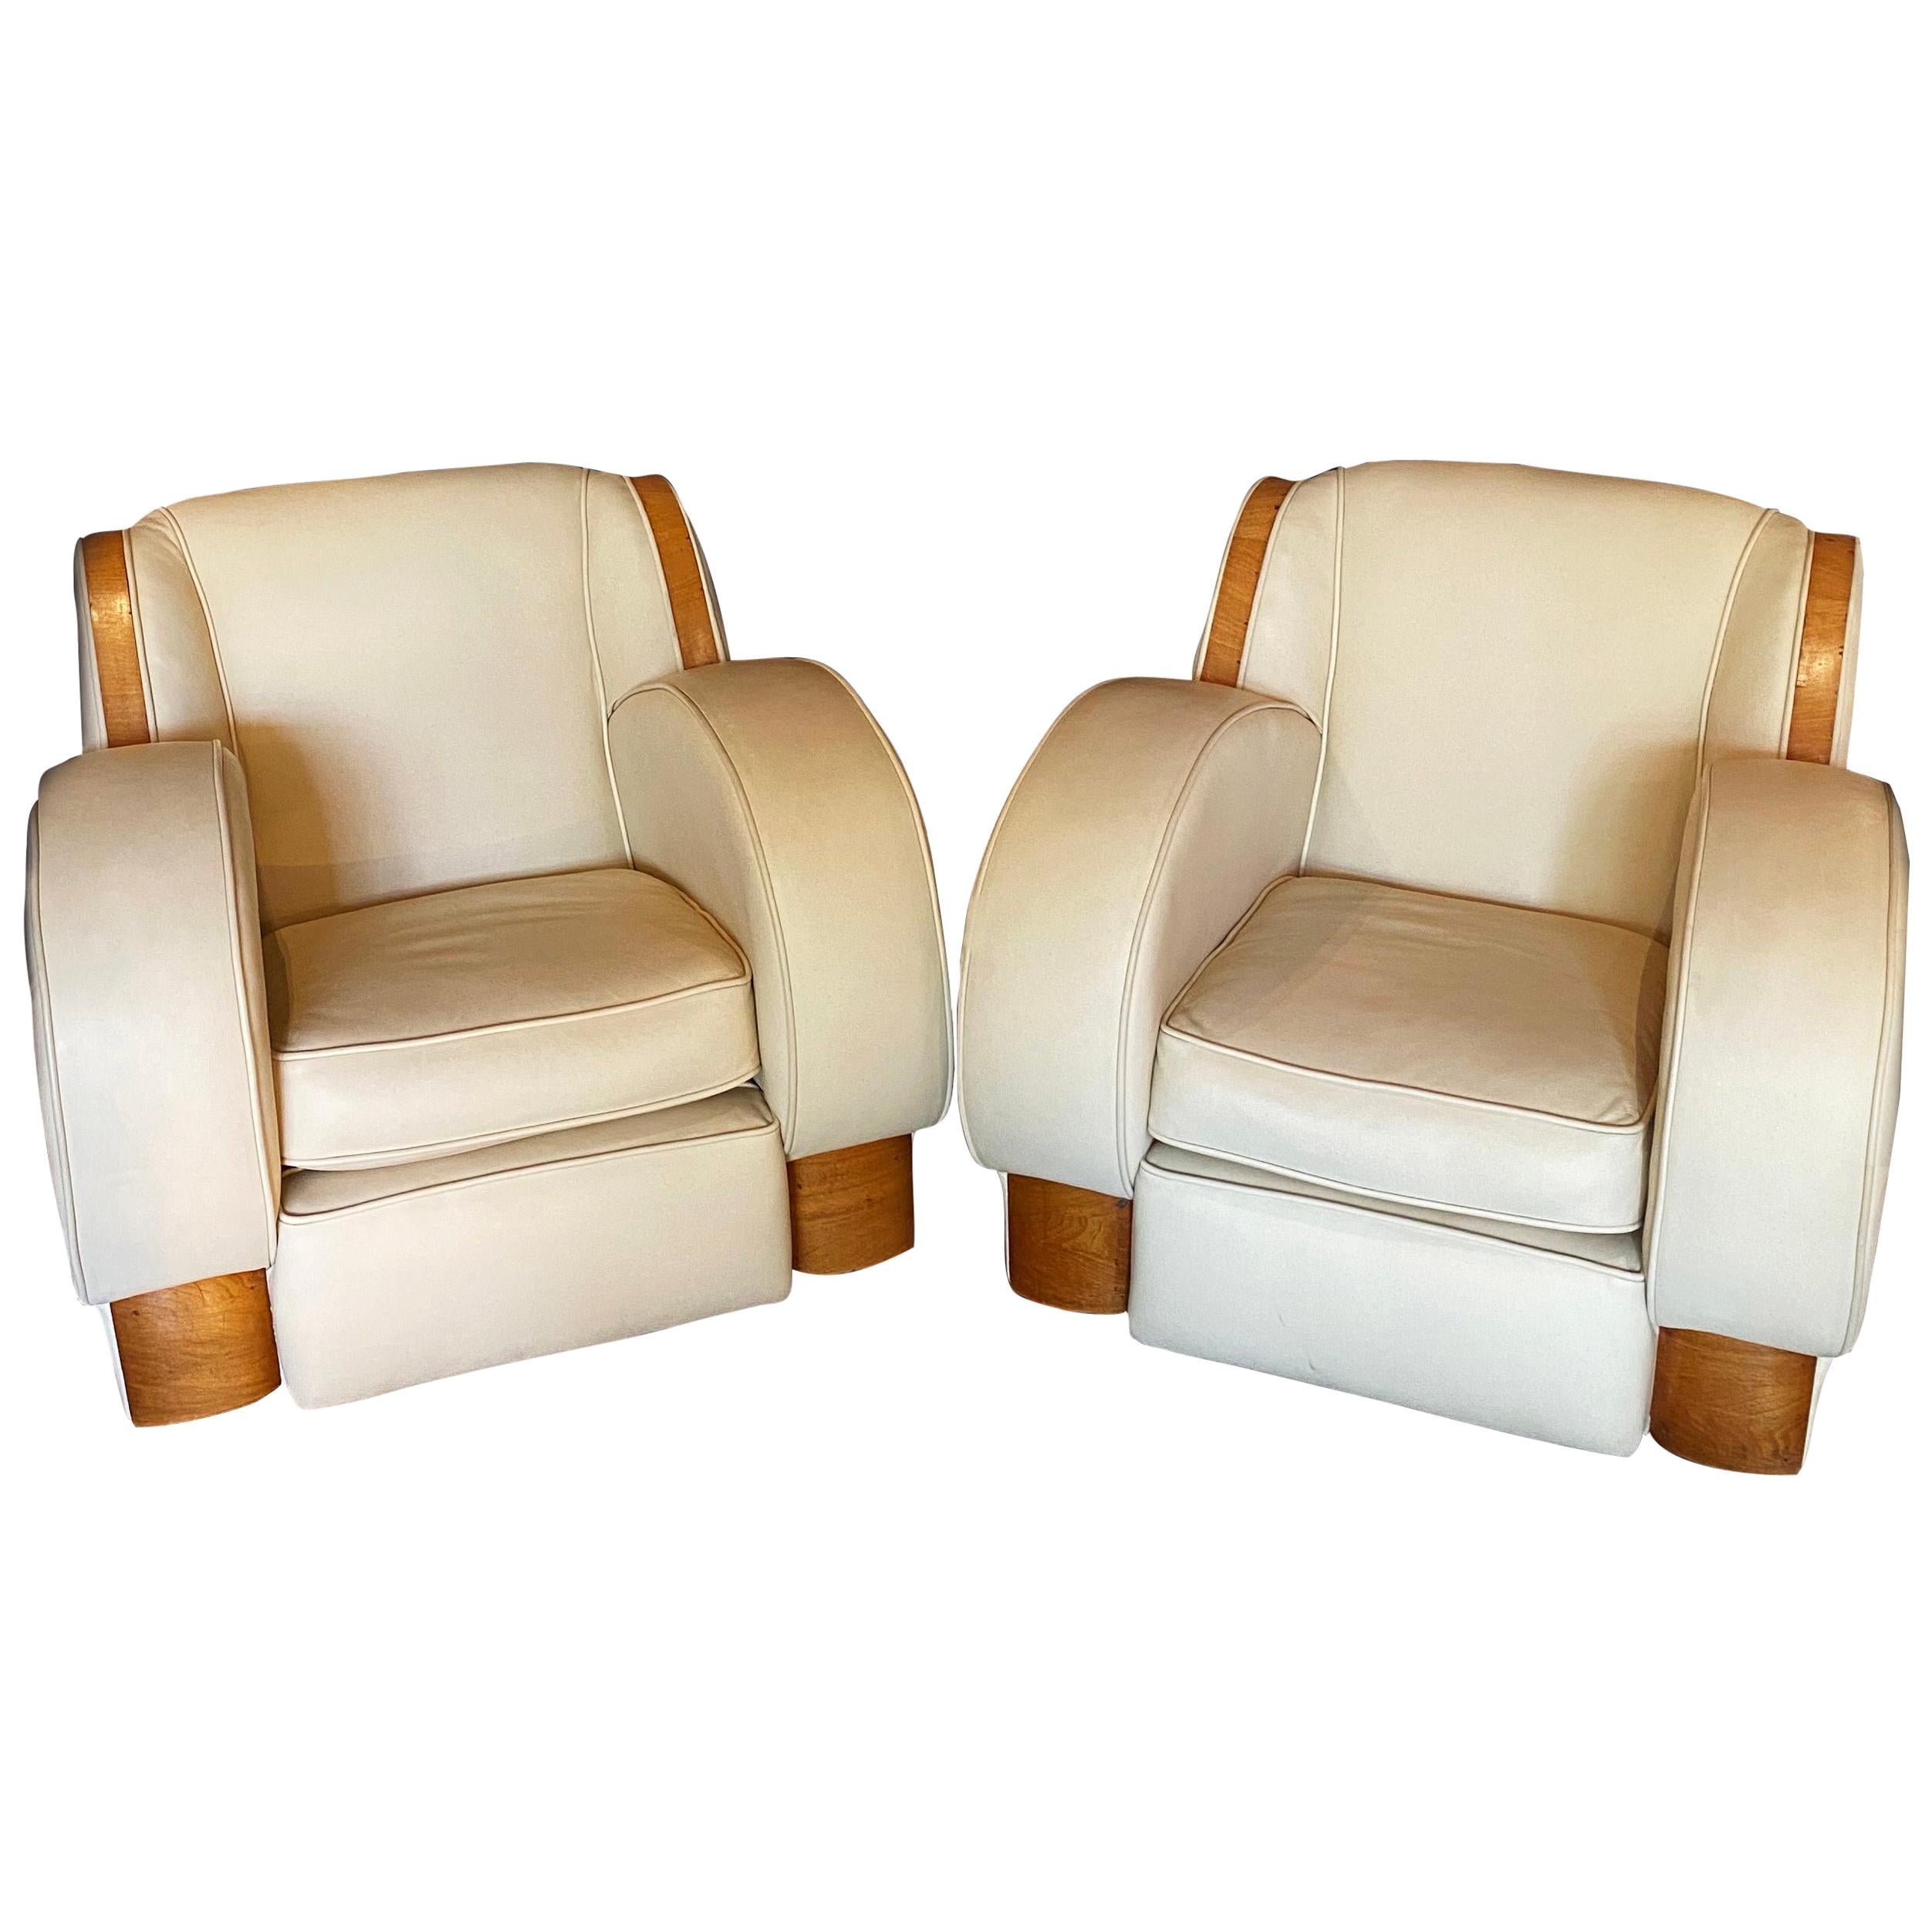 1950's Pair of Cream & Oak Veneer Leather Art Deco Style Club Chairs